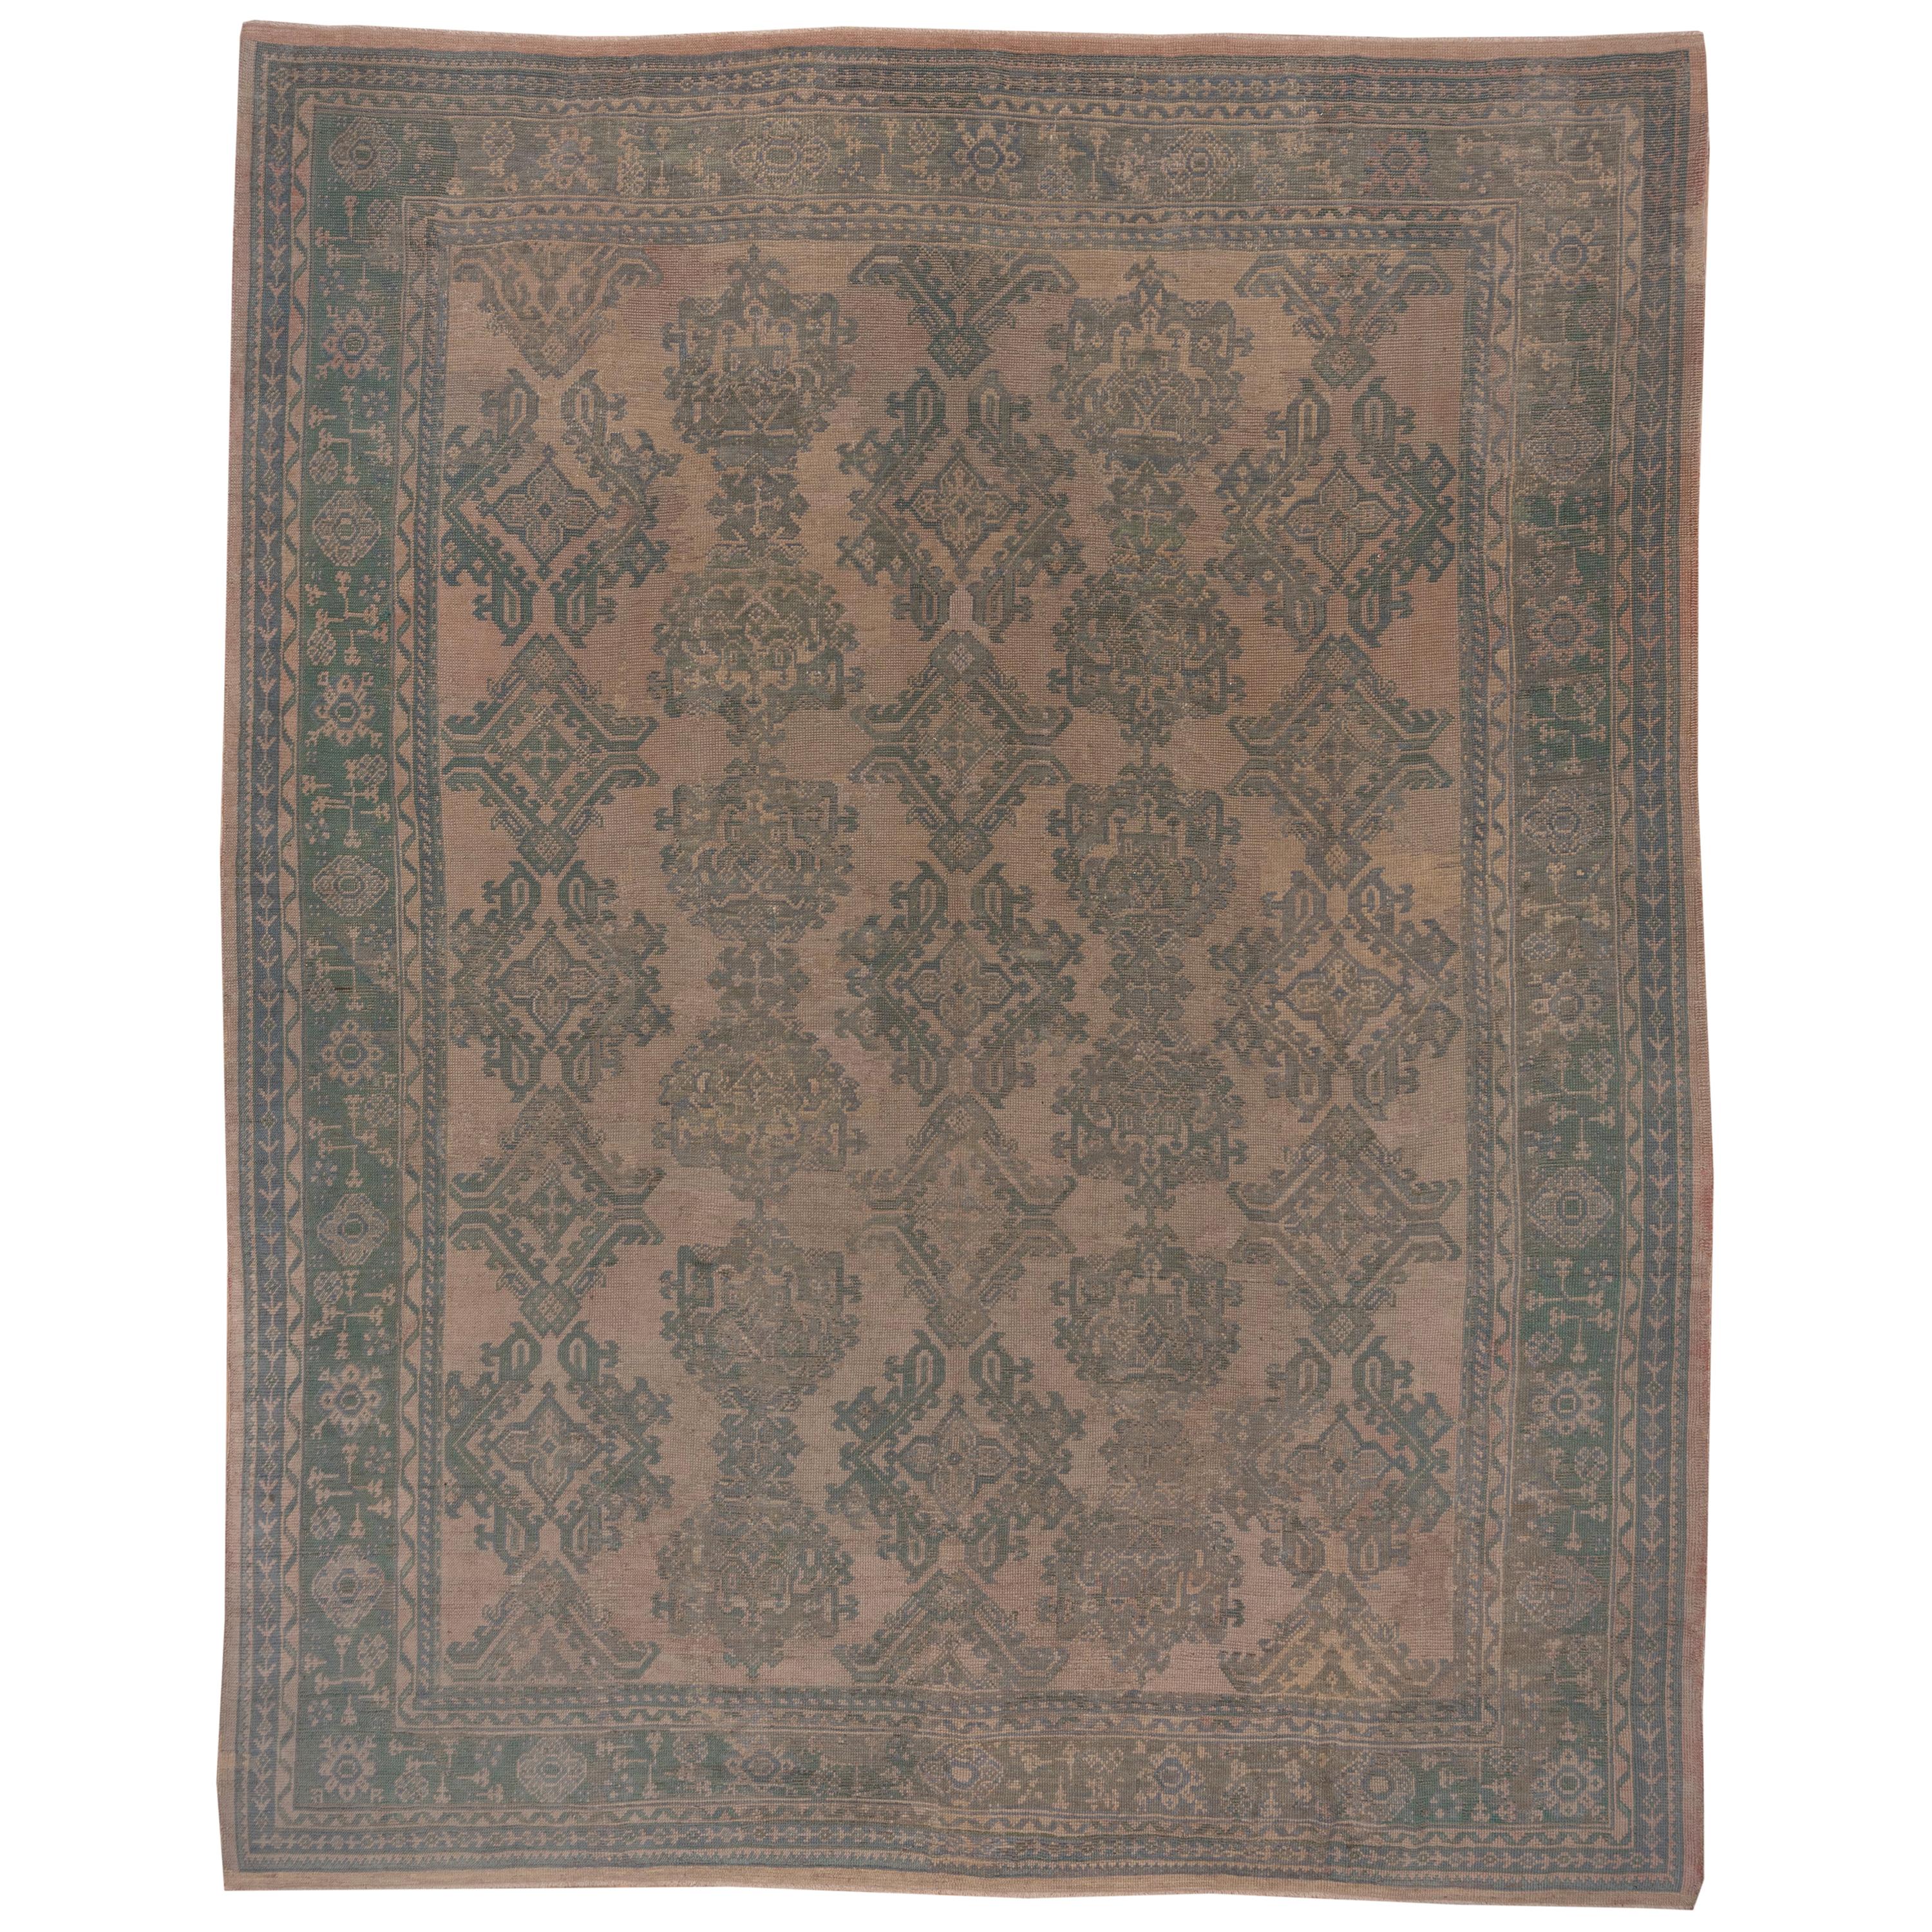 Light Brown and Green Antique Oushak Carpet, circa 1920s